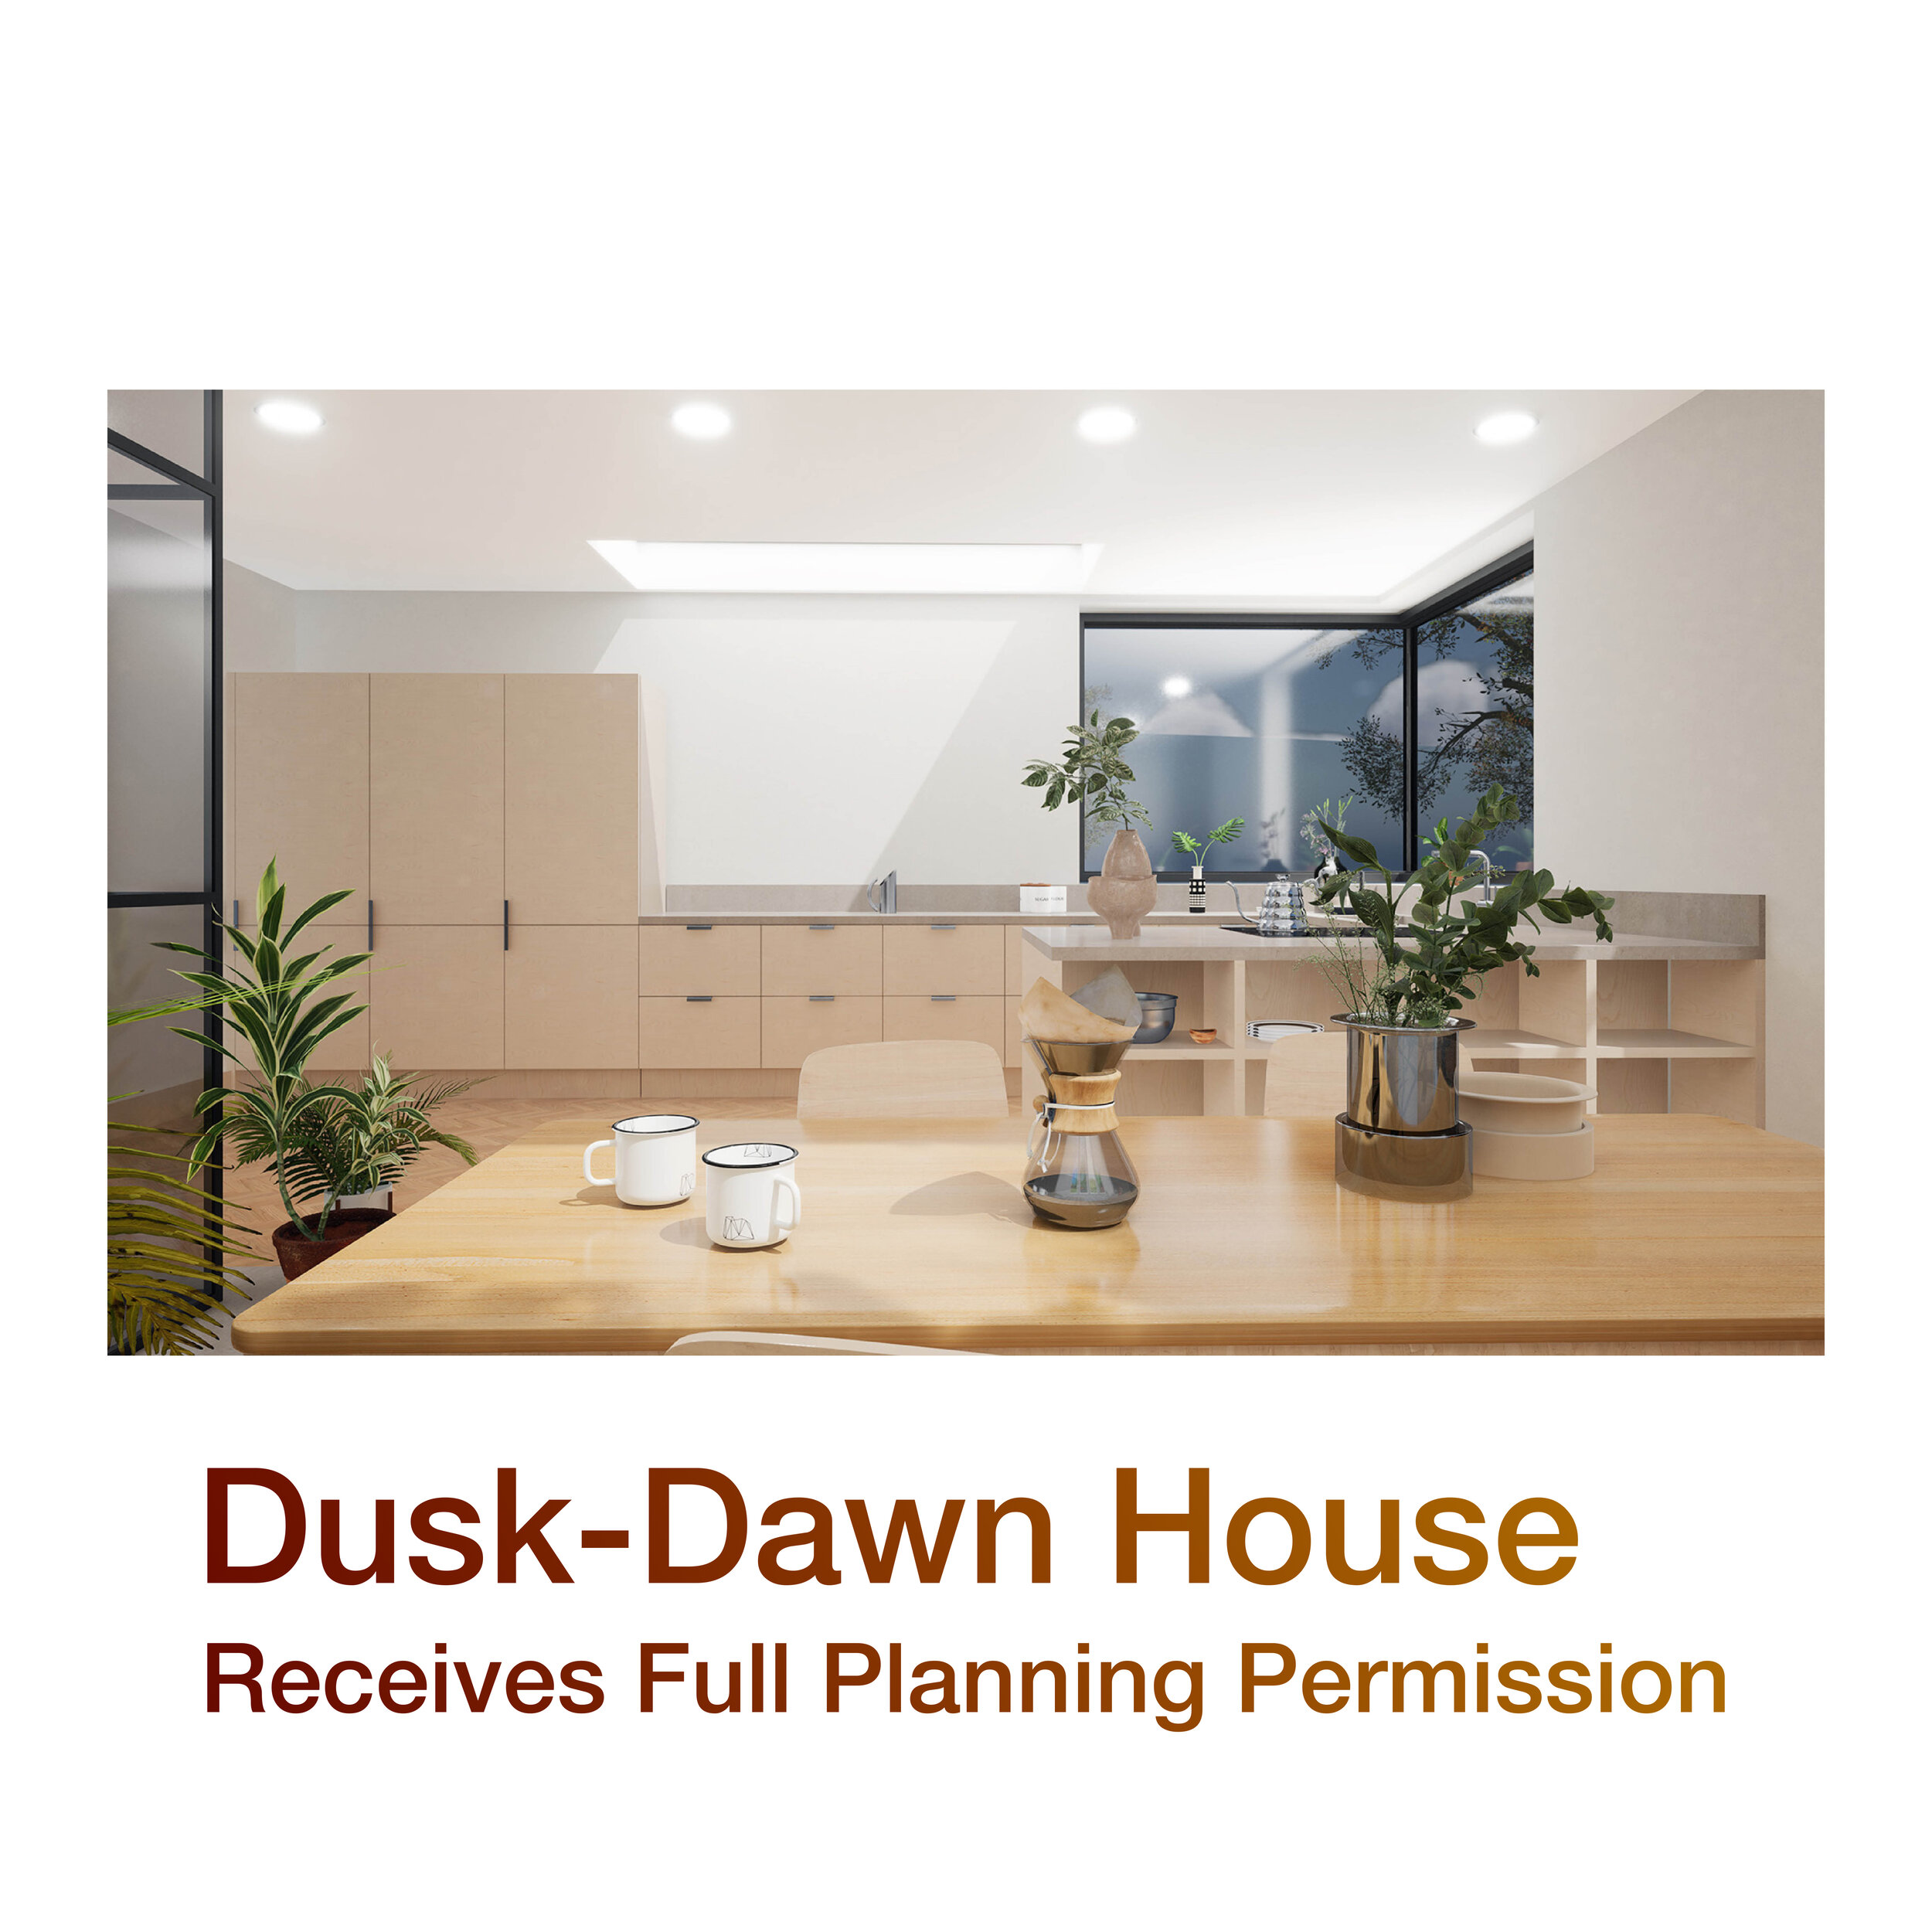 Dusk-Dawn House 10_Receives Full Planning Permission_Sustainable Cottingham Architects_Samuel Kendall Associates